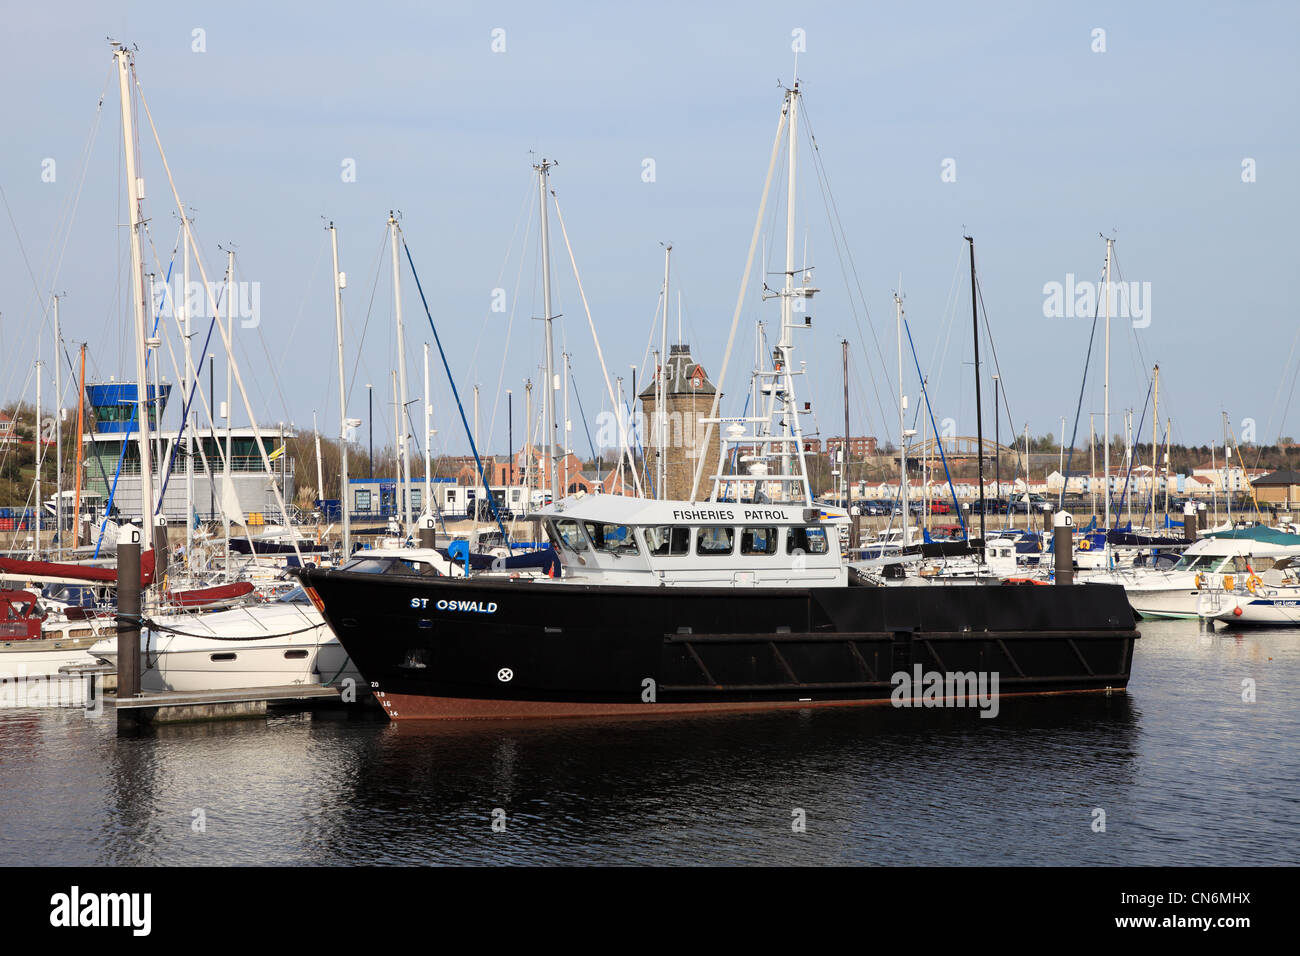 Fisheries Patrol Boat St Oswald moored at Royal Quays Marina, North Shields, NE England UK Stock Photo